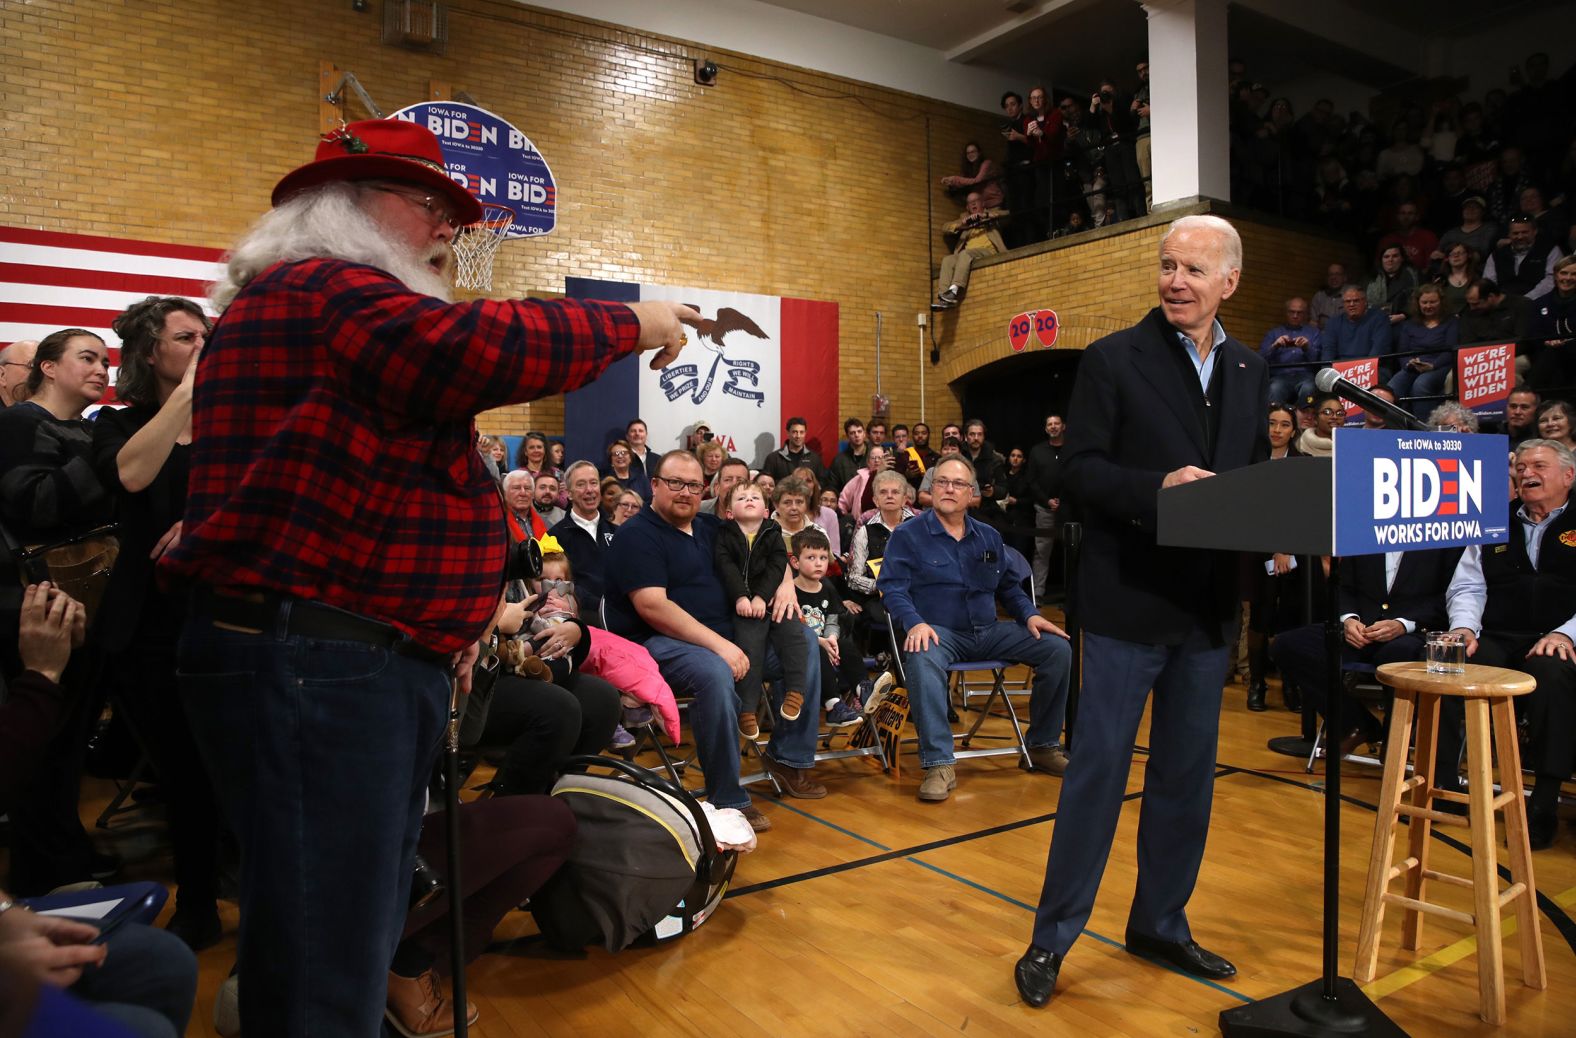 Biden speaks during a campaign event in Cedar Rapids, Iowa, on February 1.